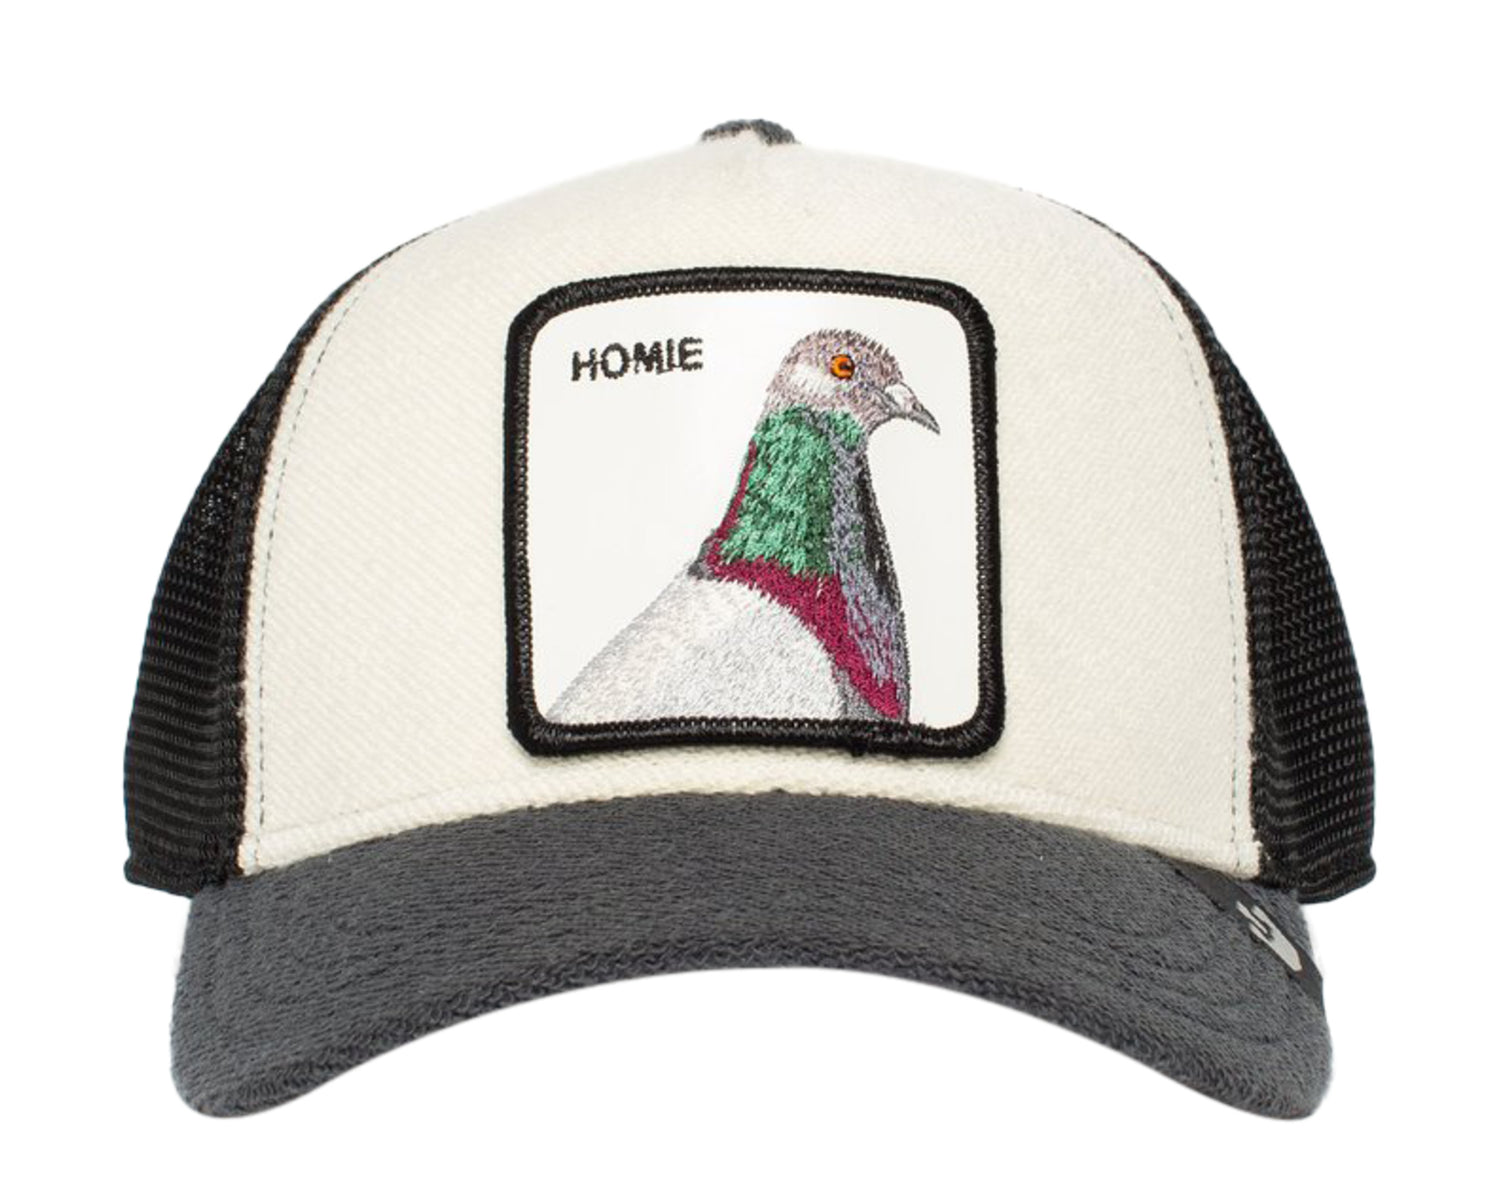 Goorin Bros - The Farm - Homie Pigeon Trucker Hat